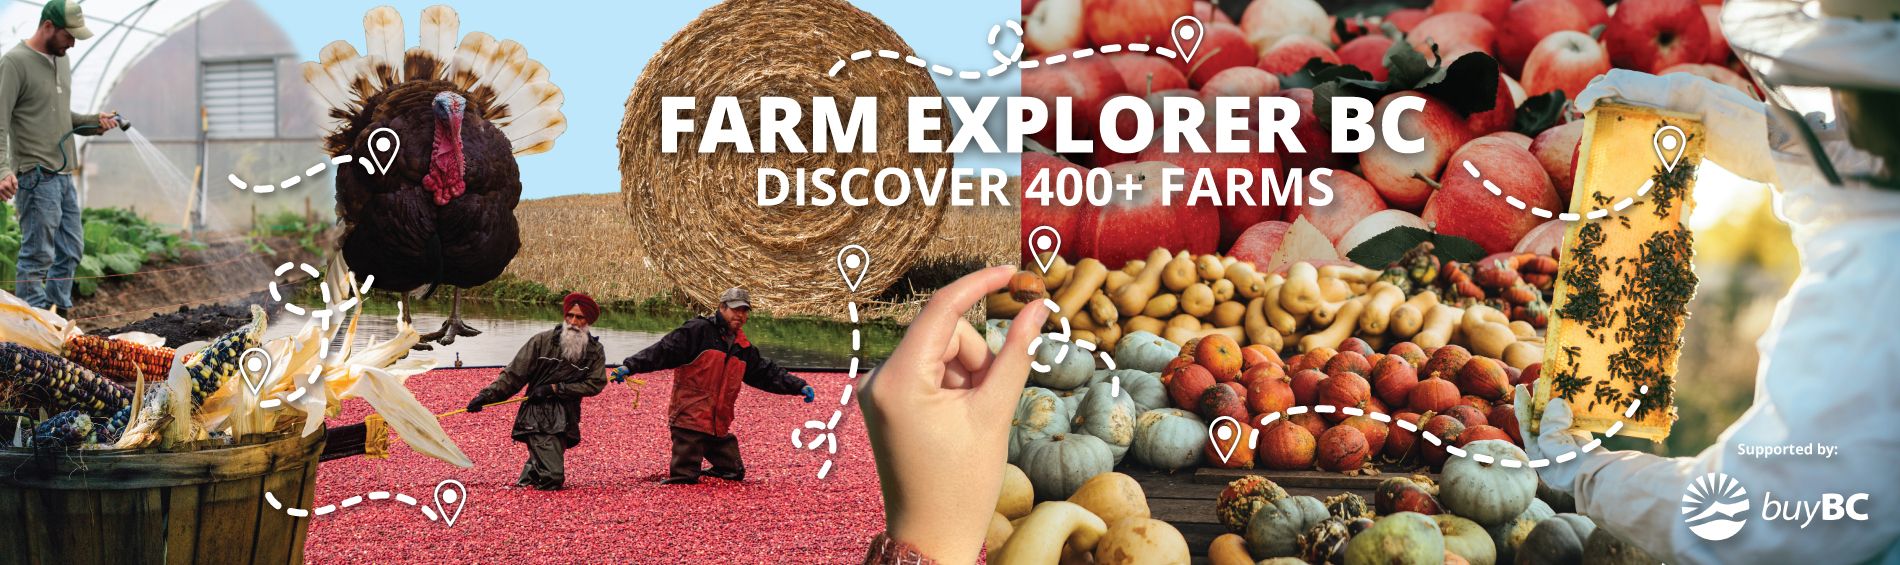 Farm Explorer BC Launches